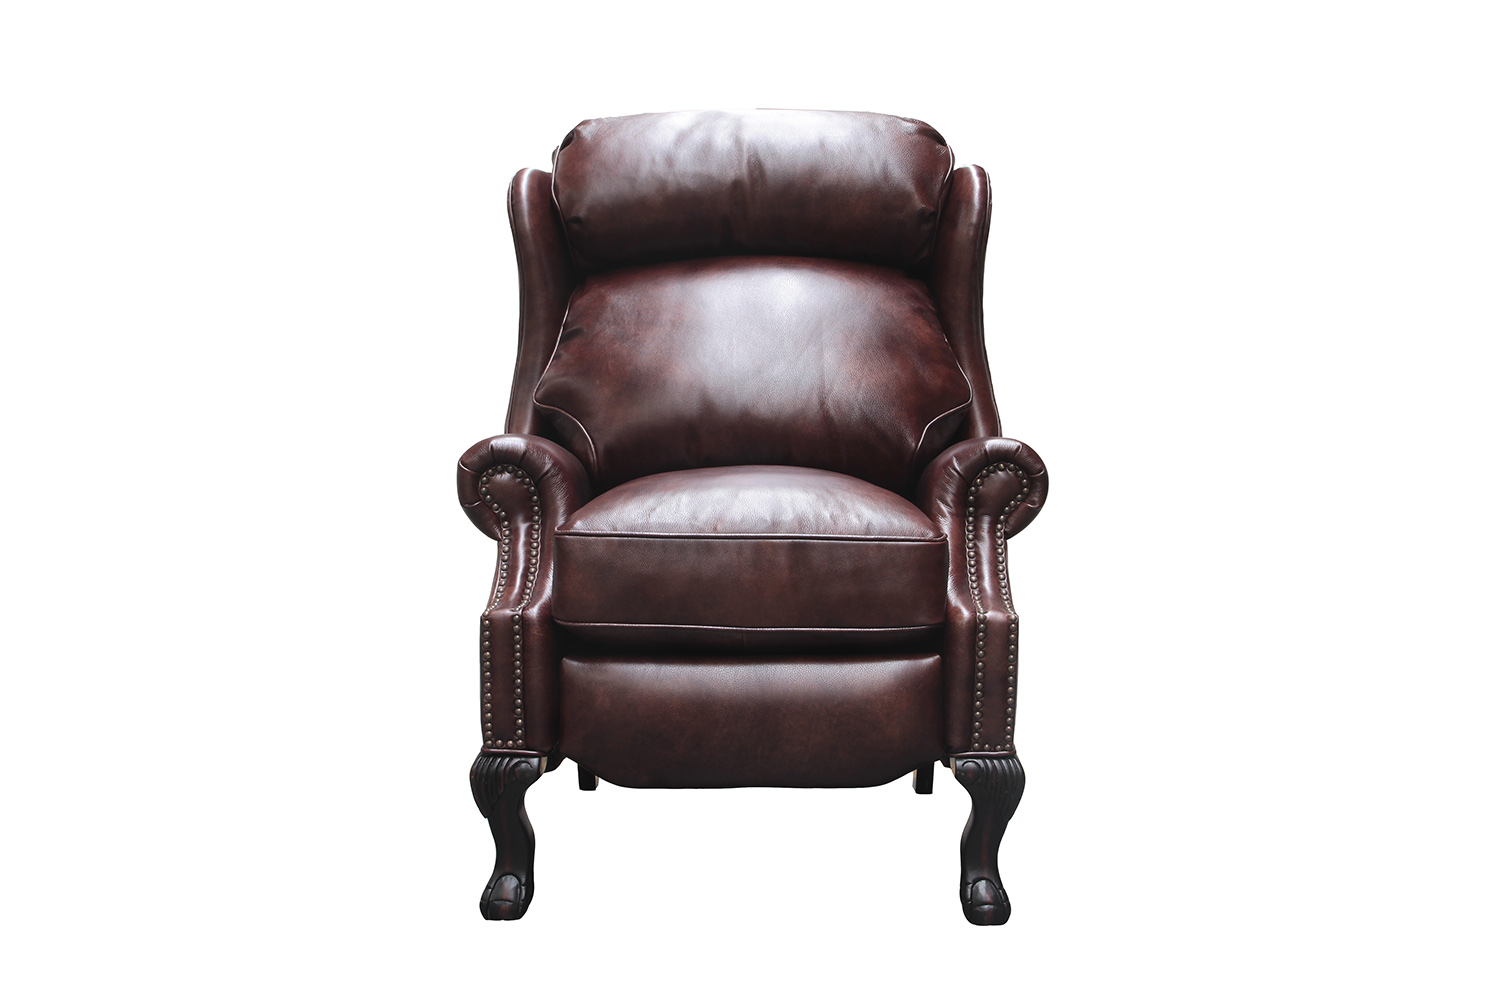 Barcalounger Danbury Recliner Chair - Wenlock Fudge/All Leather